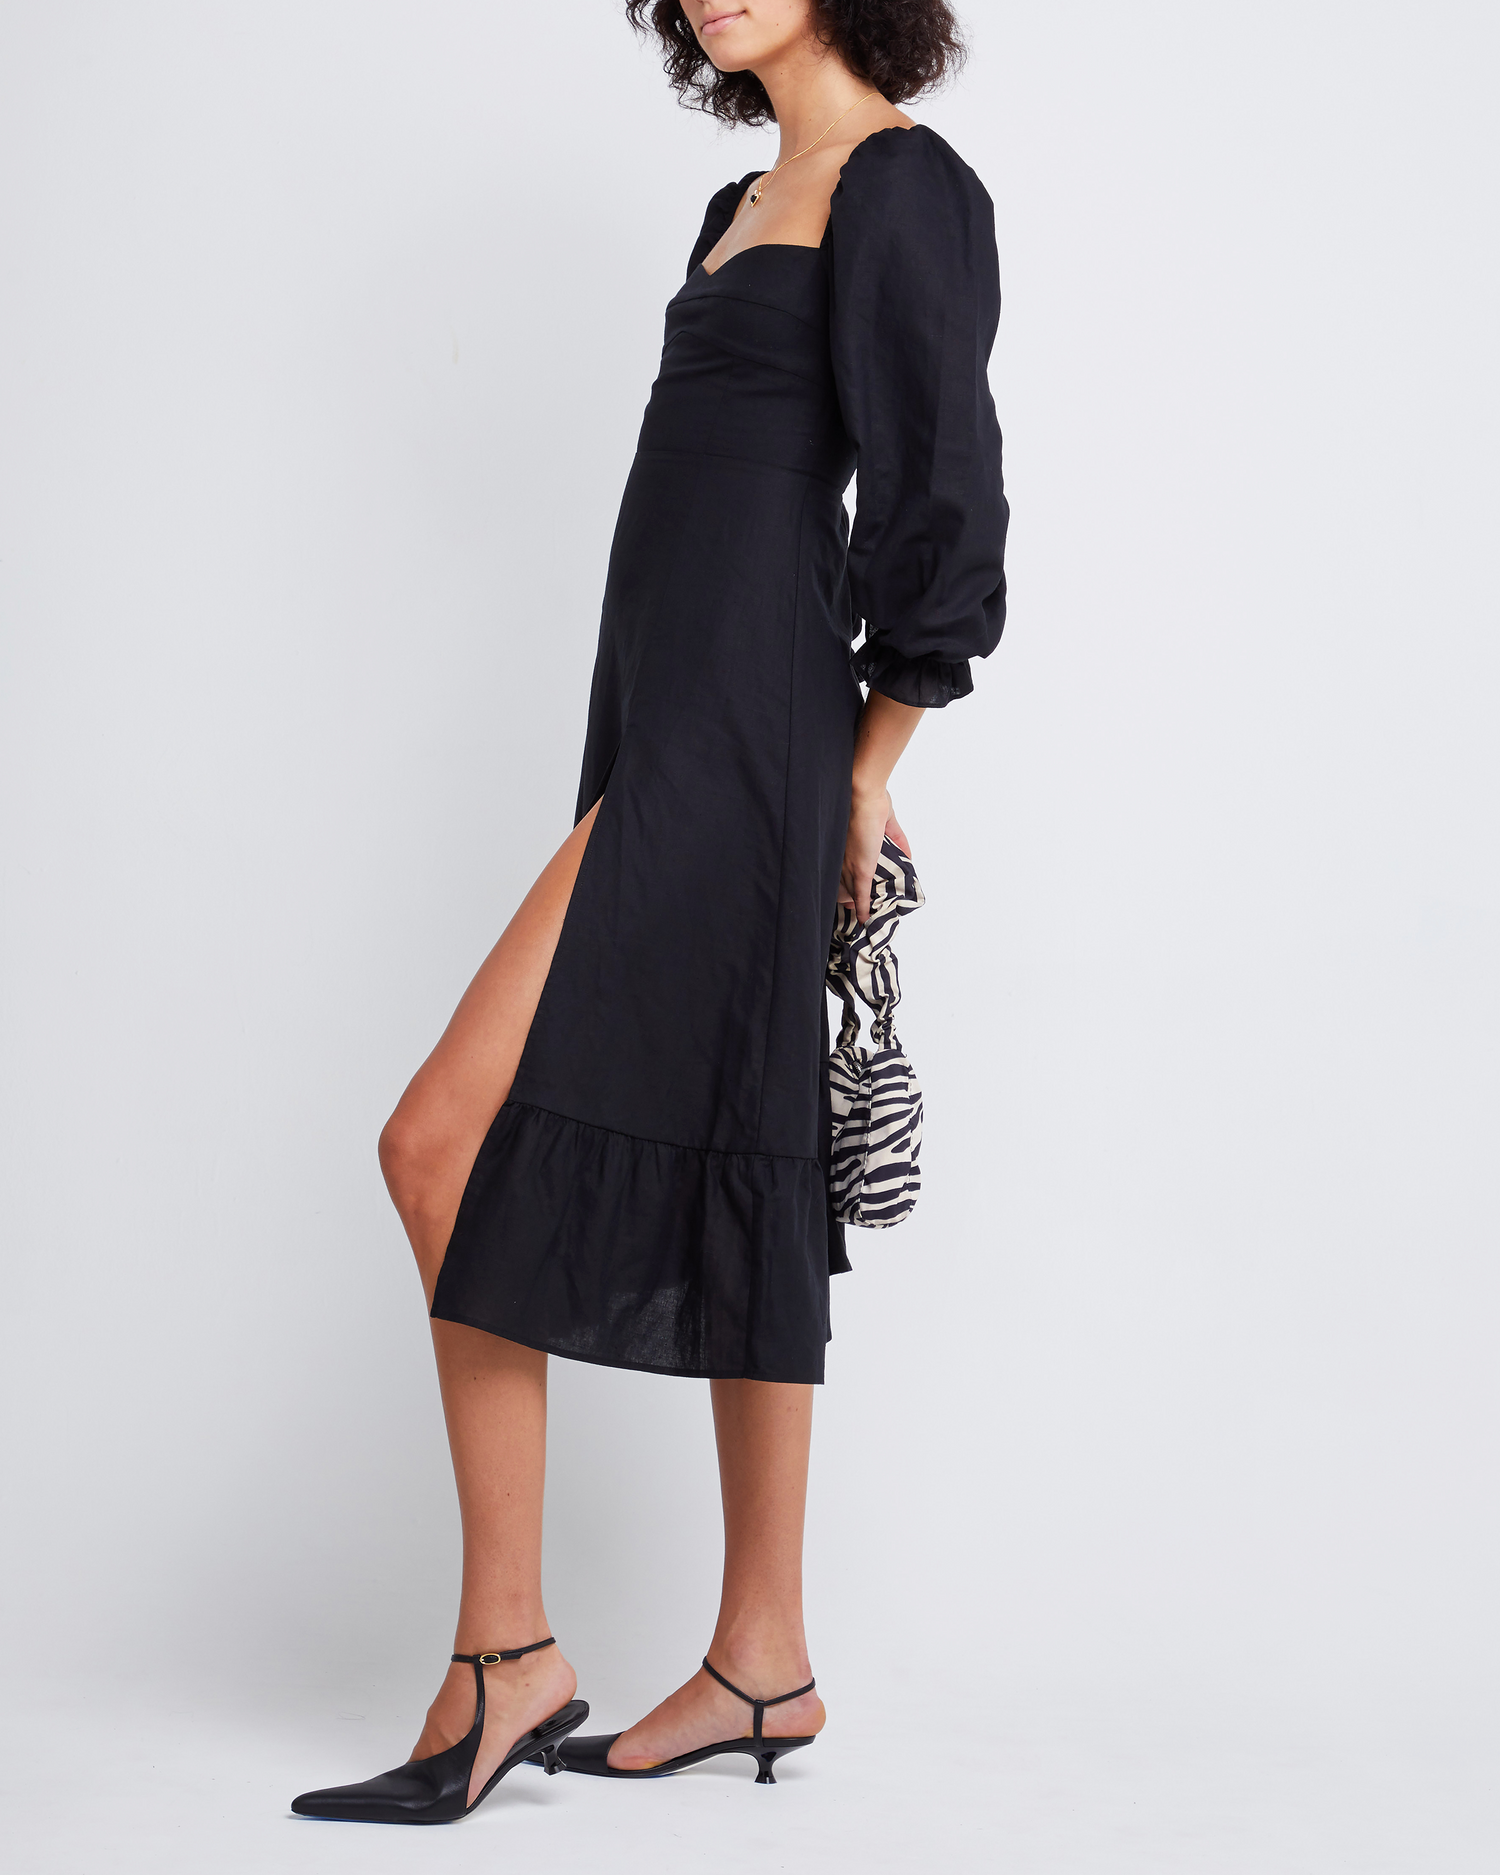 Third image of Aubrey Midi Dress, a black midi dress, long sleeves, puff sleeves, sweetheart neckline, side slit